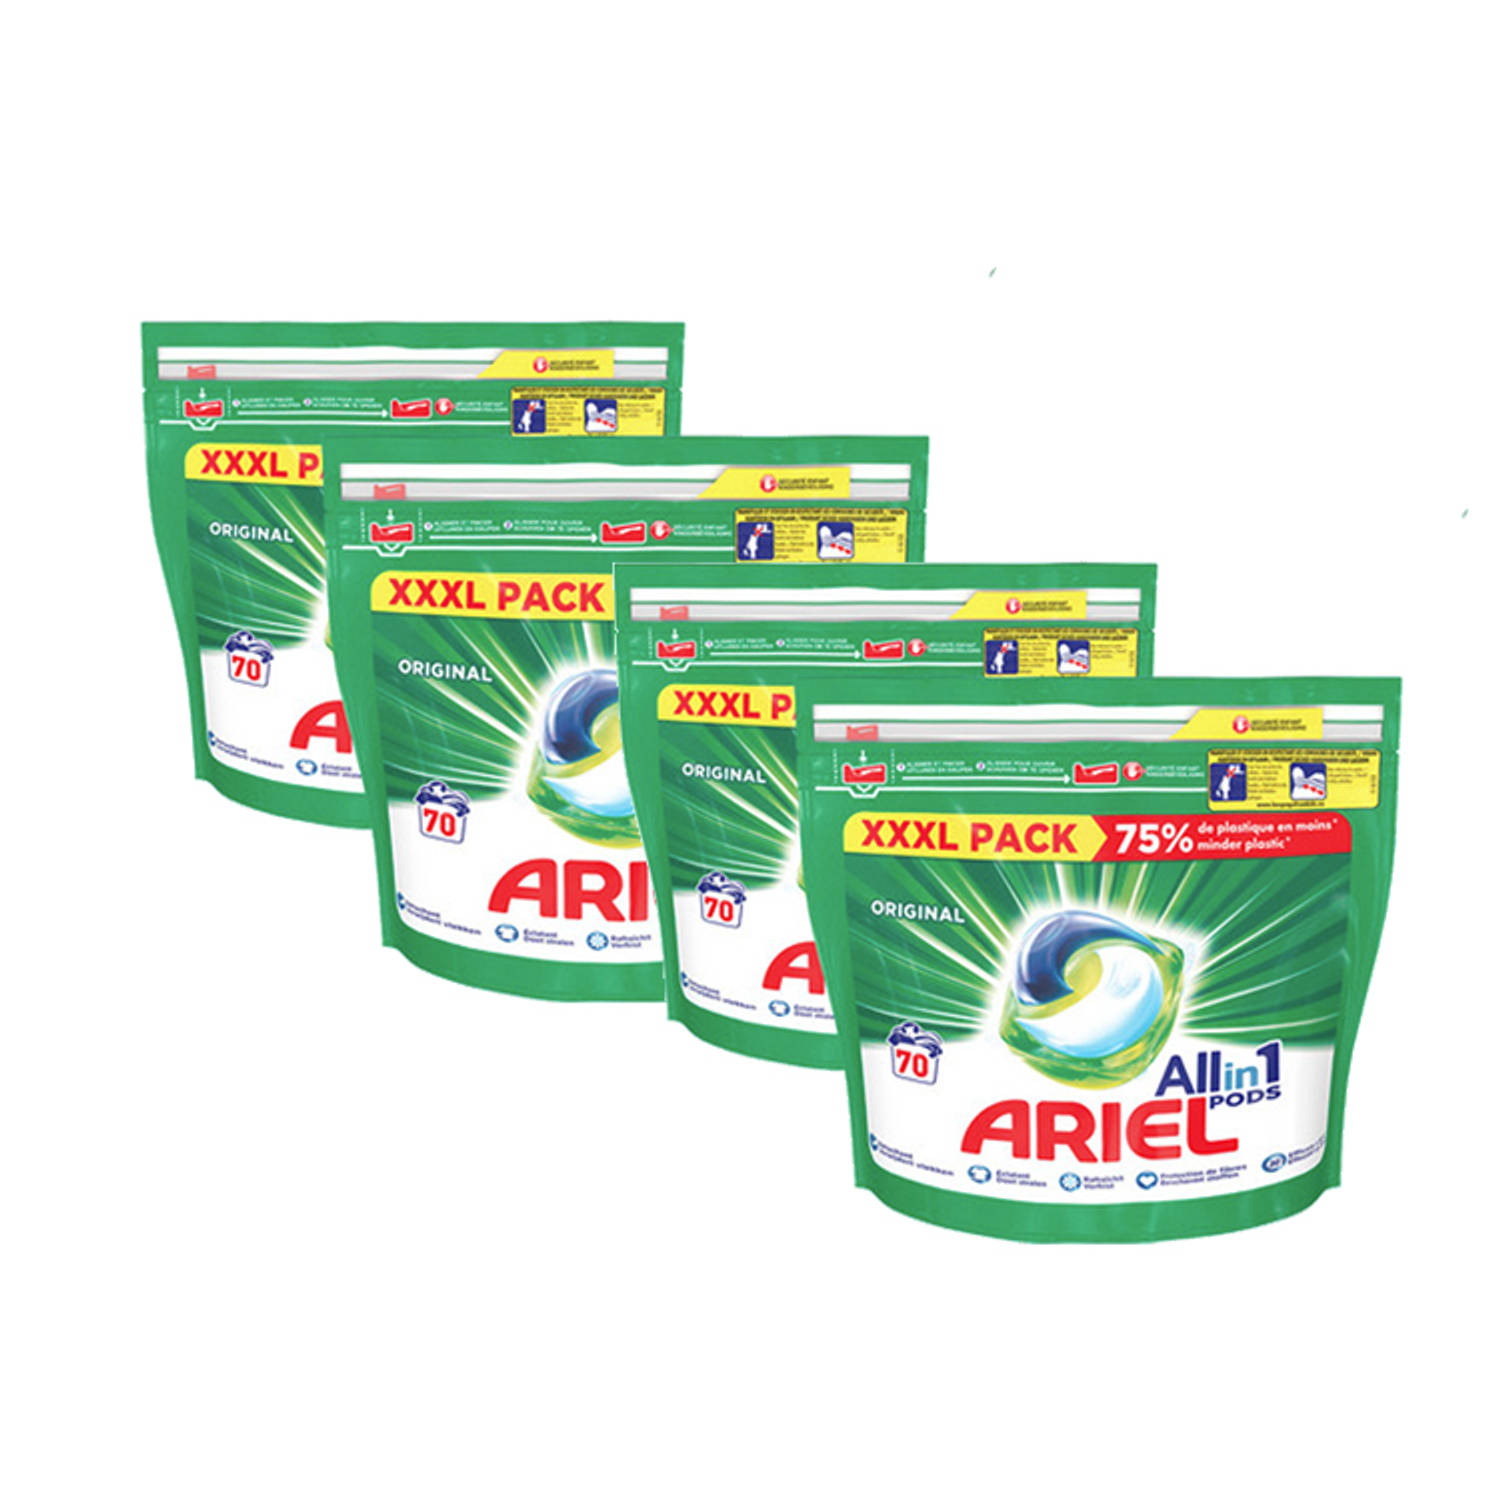 Ariel All-in-1 Pods - Regular 140 Pods